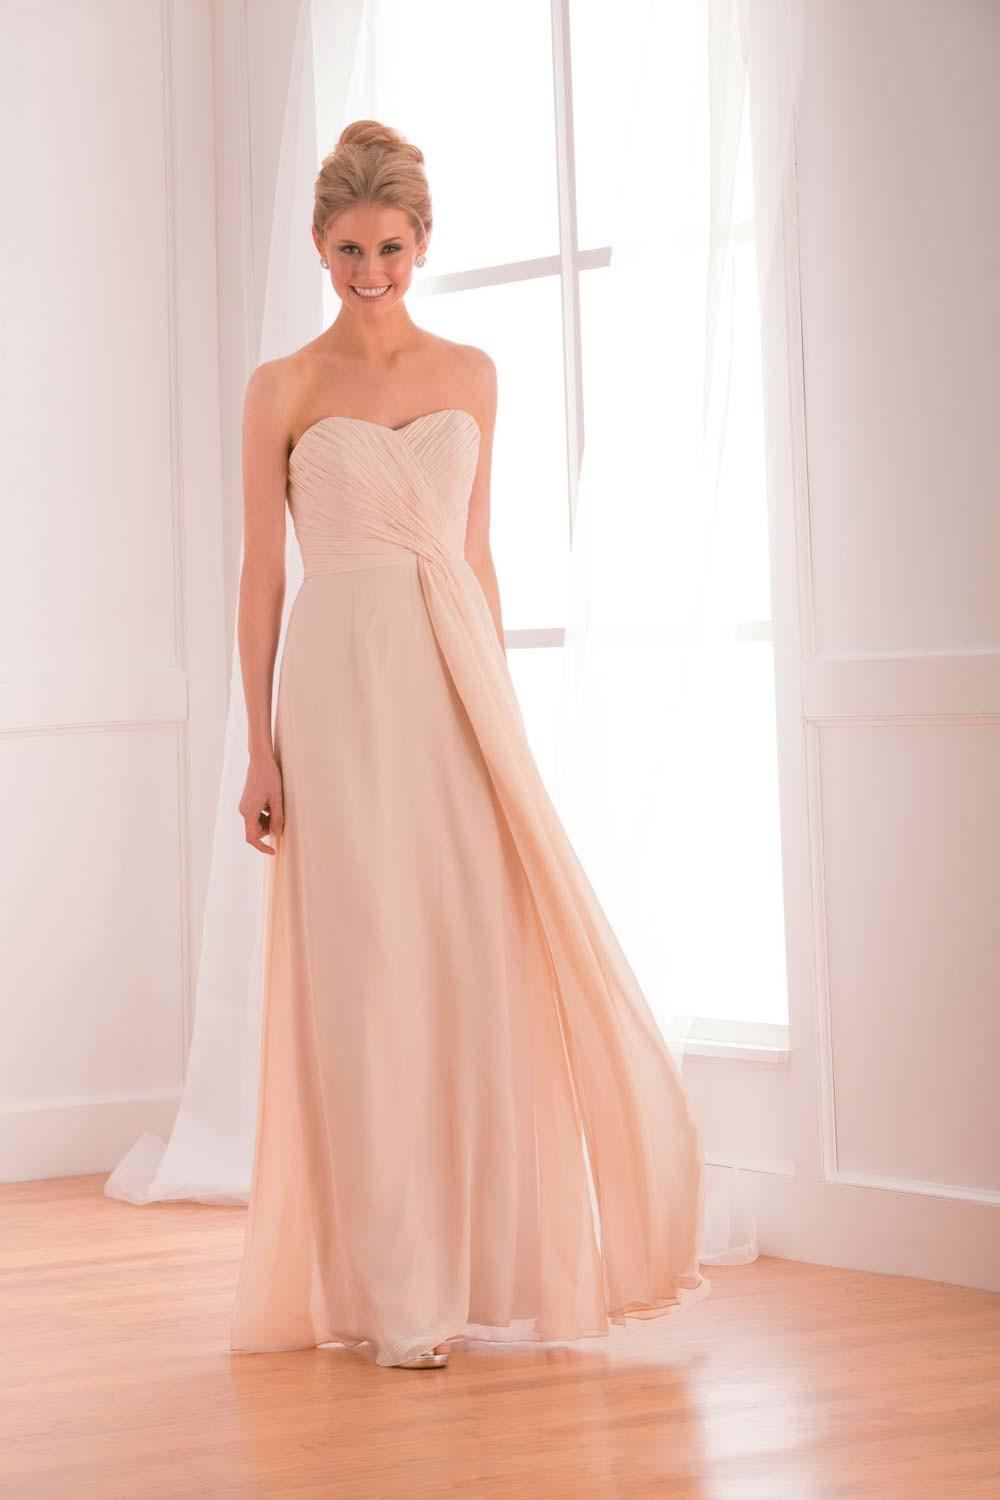 Peach-Colored Long Bridesmaid Dresses